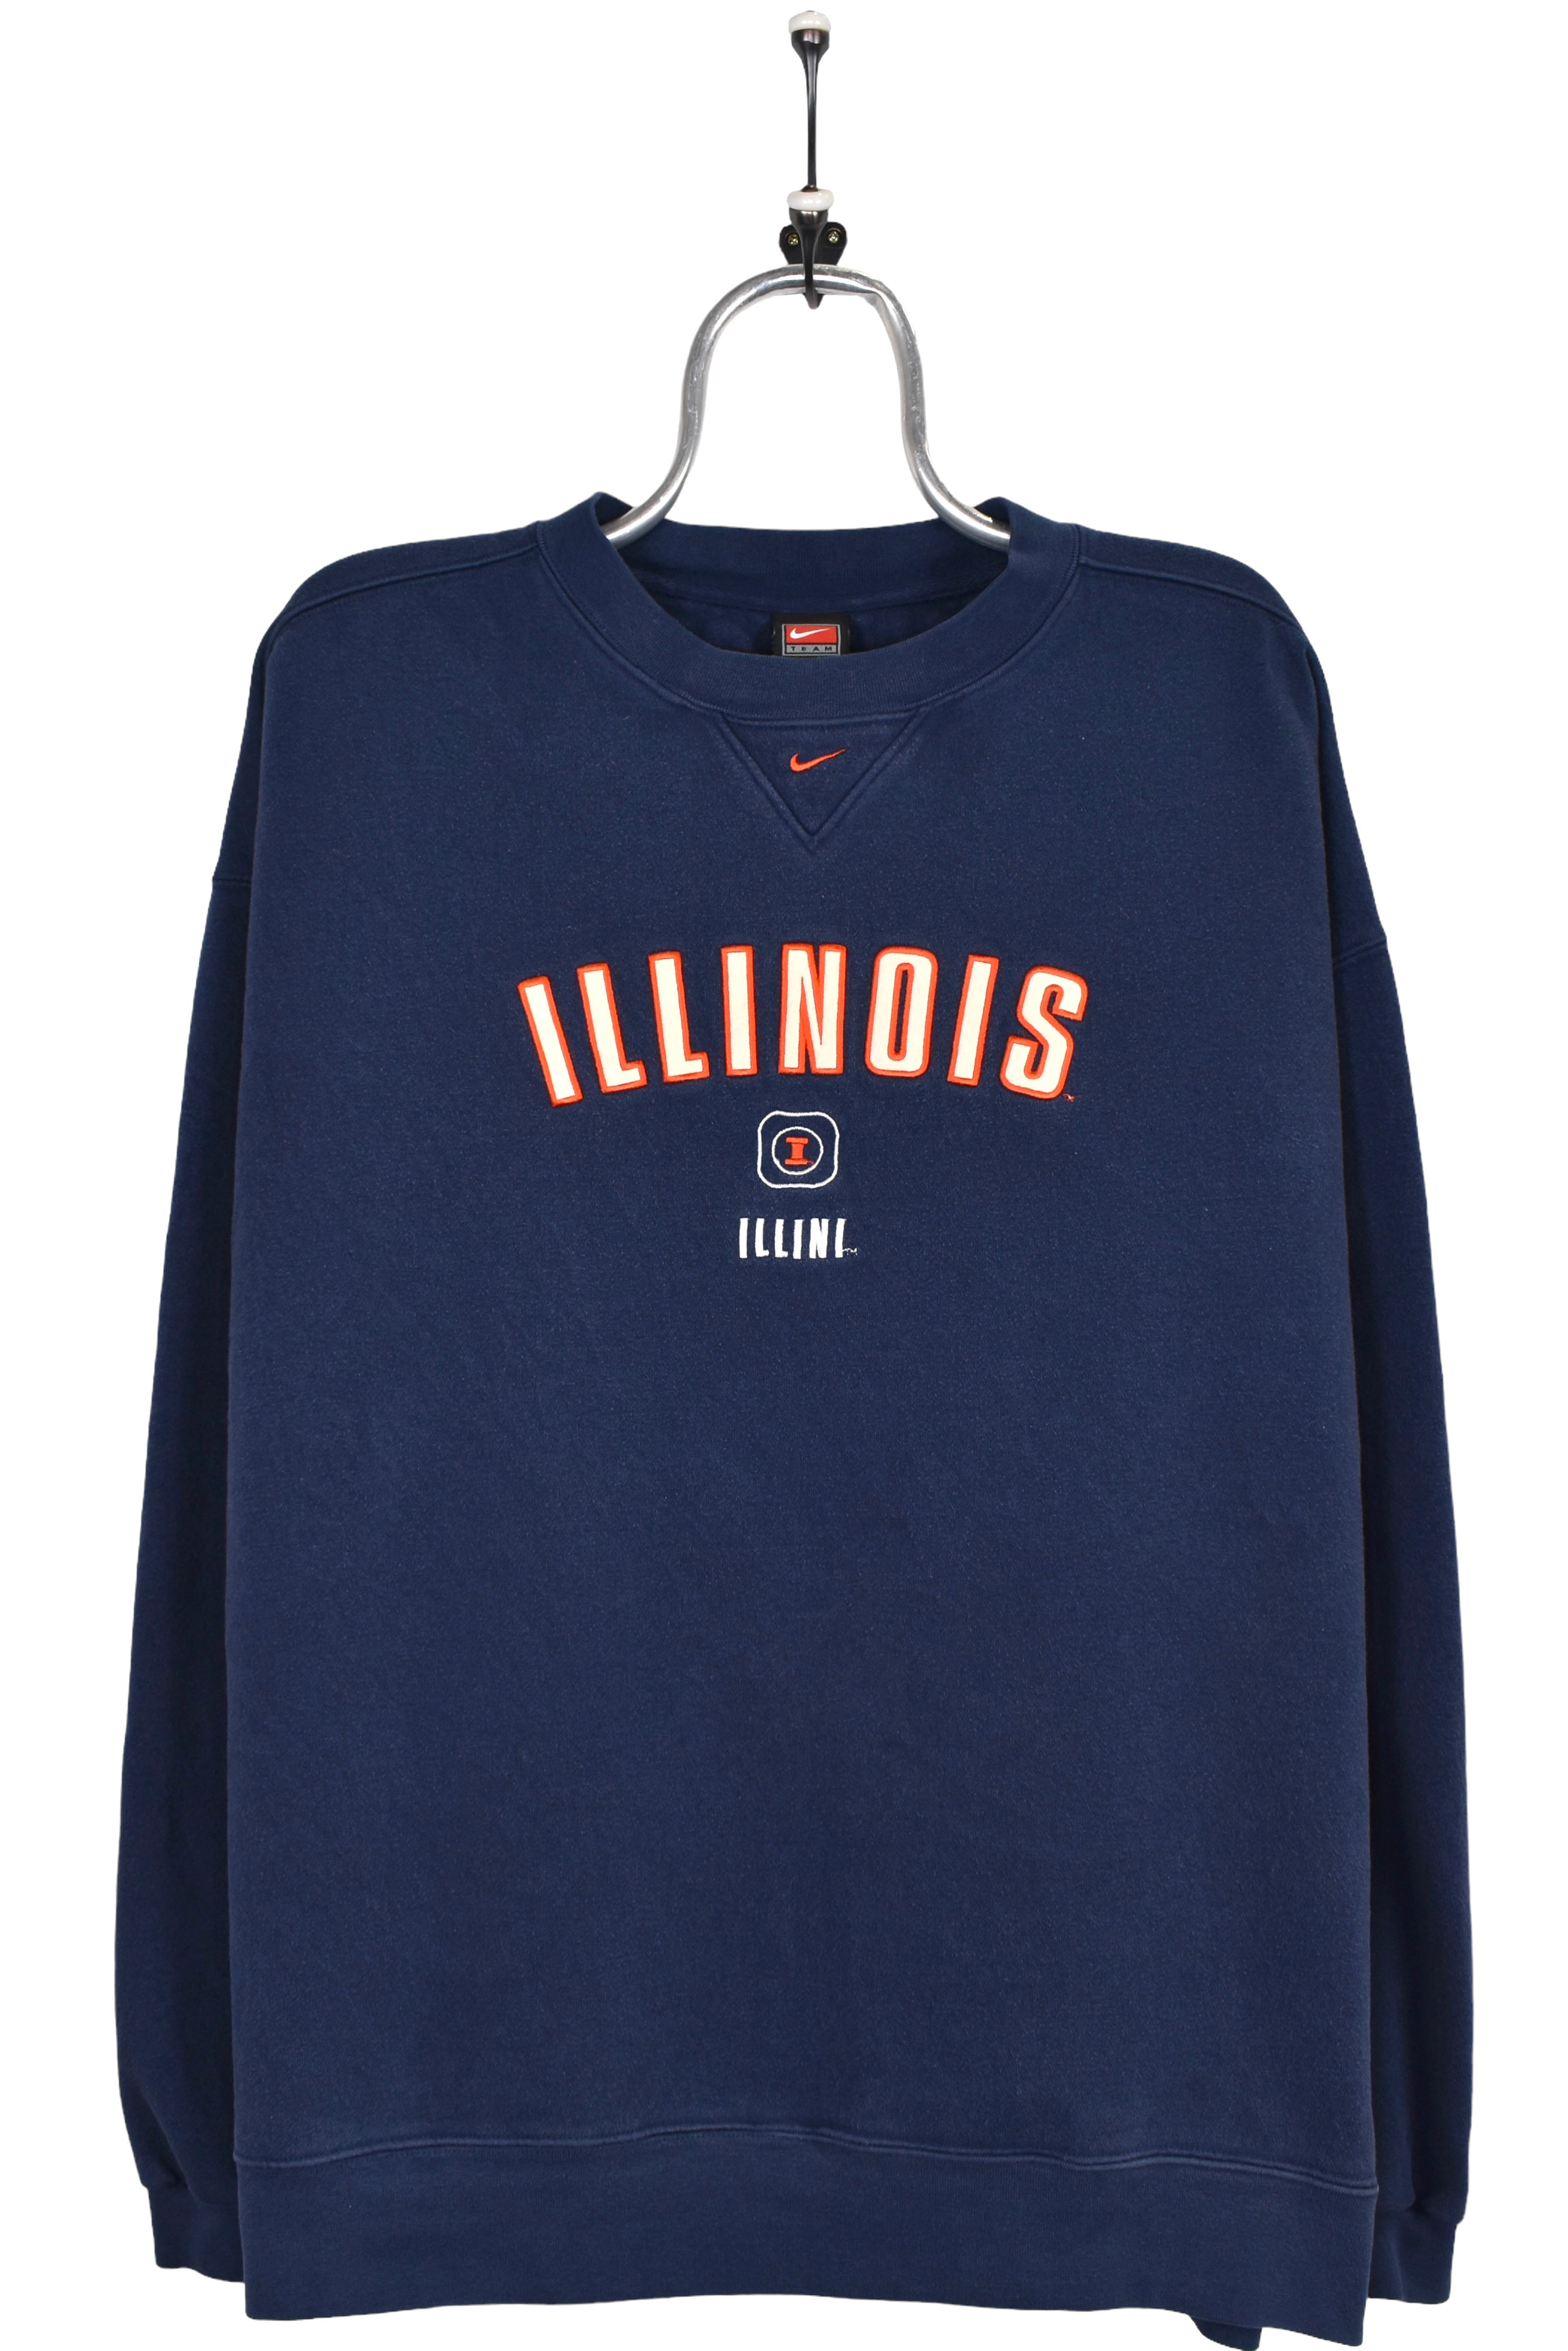 Vintage University of Illinois sweatshirt, navy Nike embroidered crewneck - XL